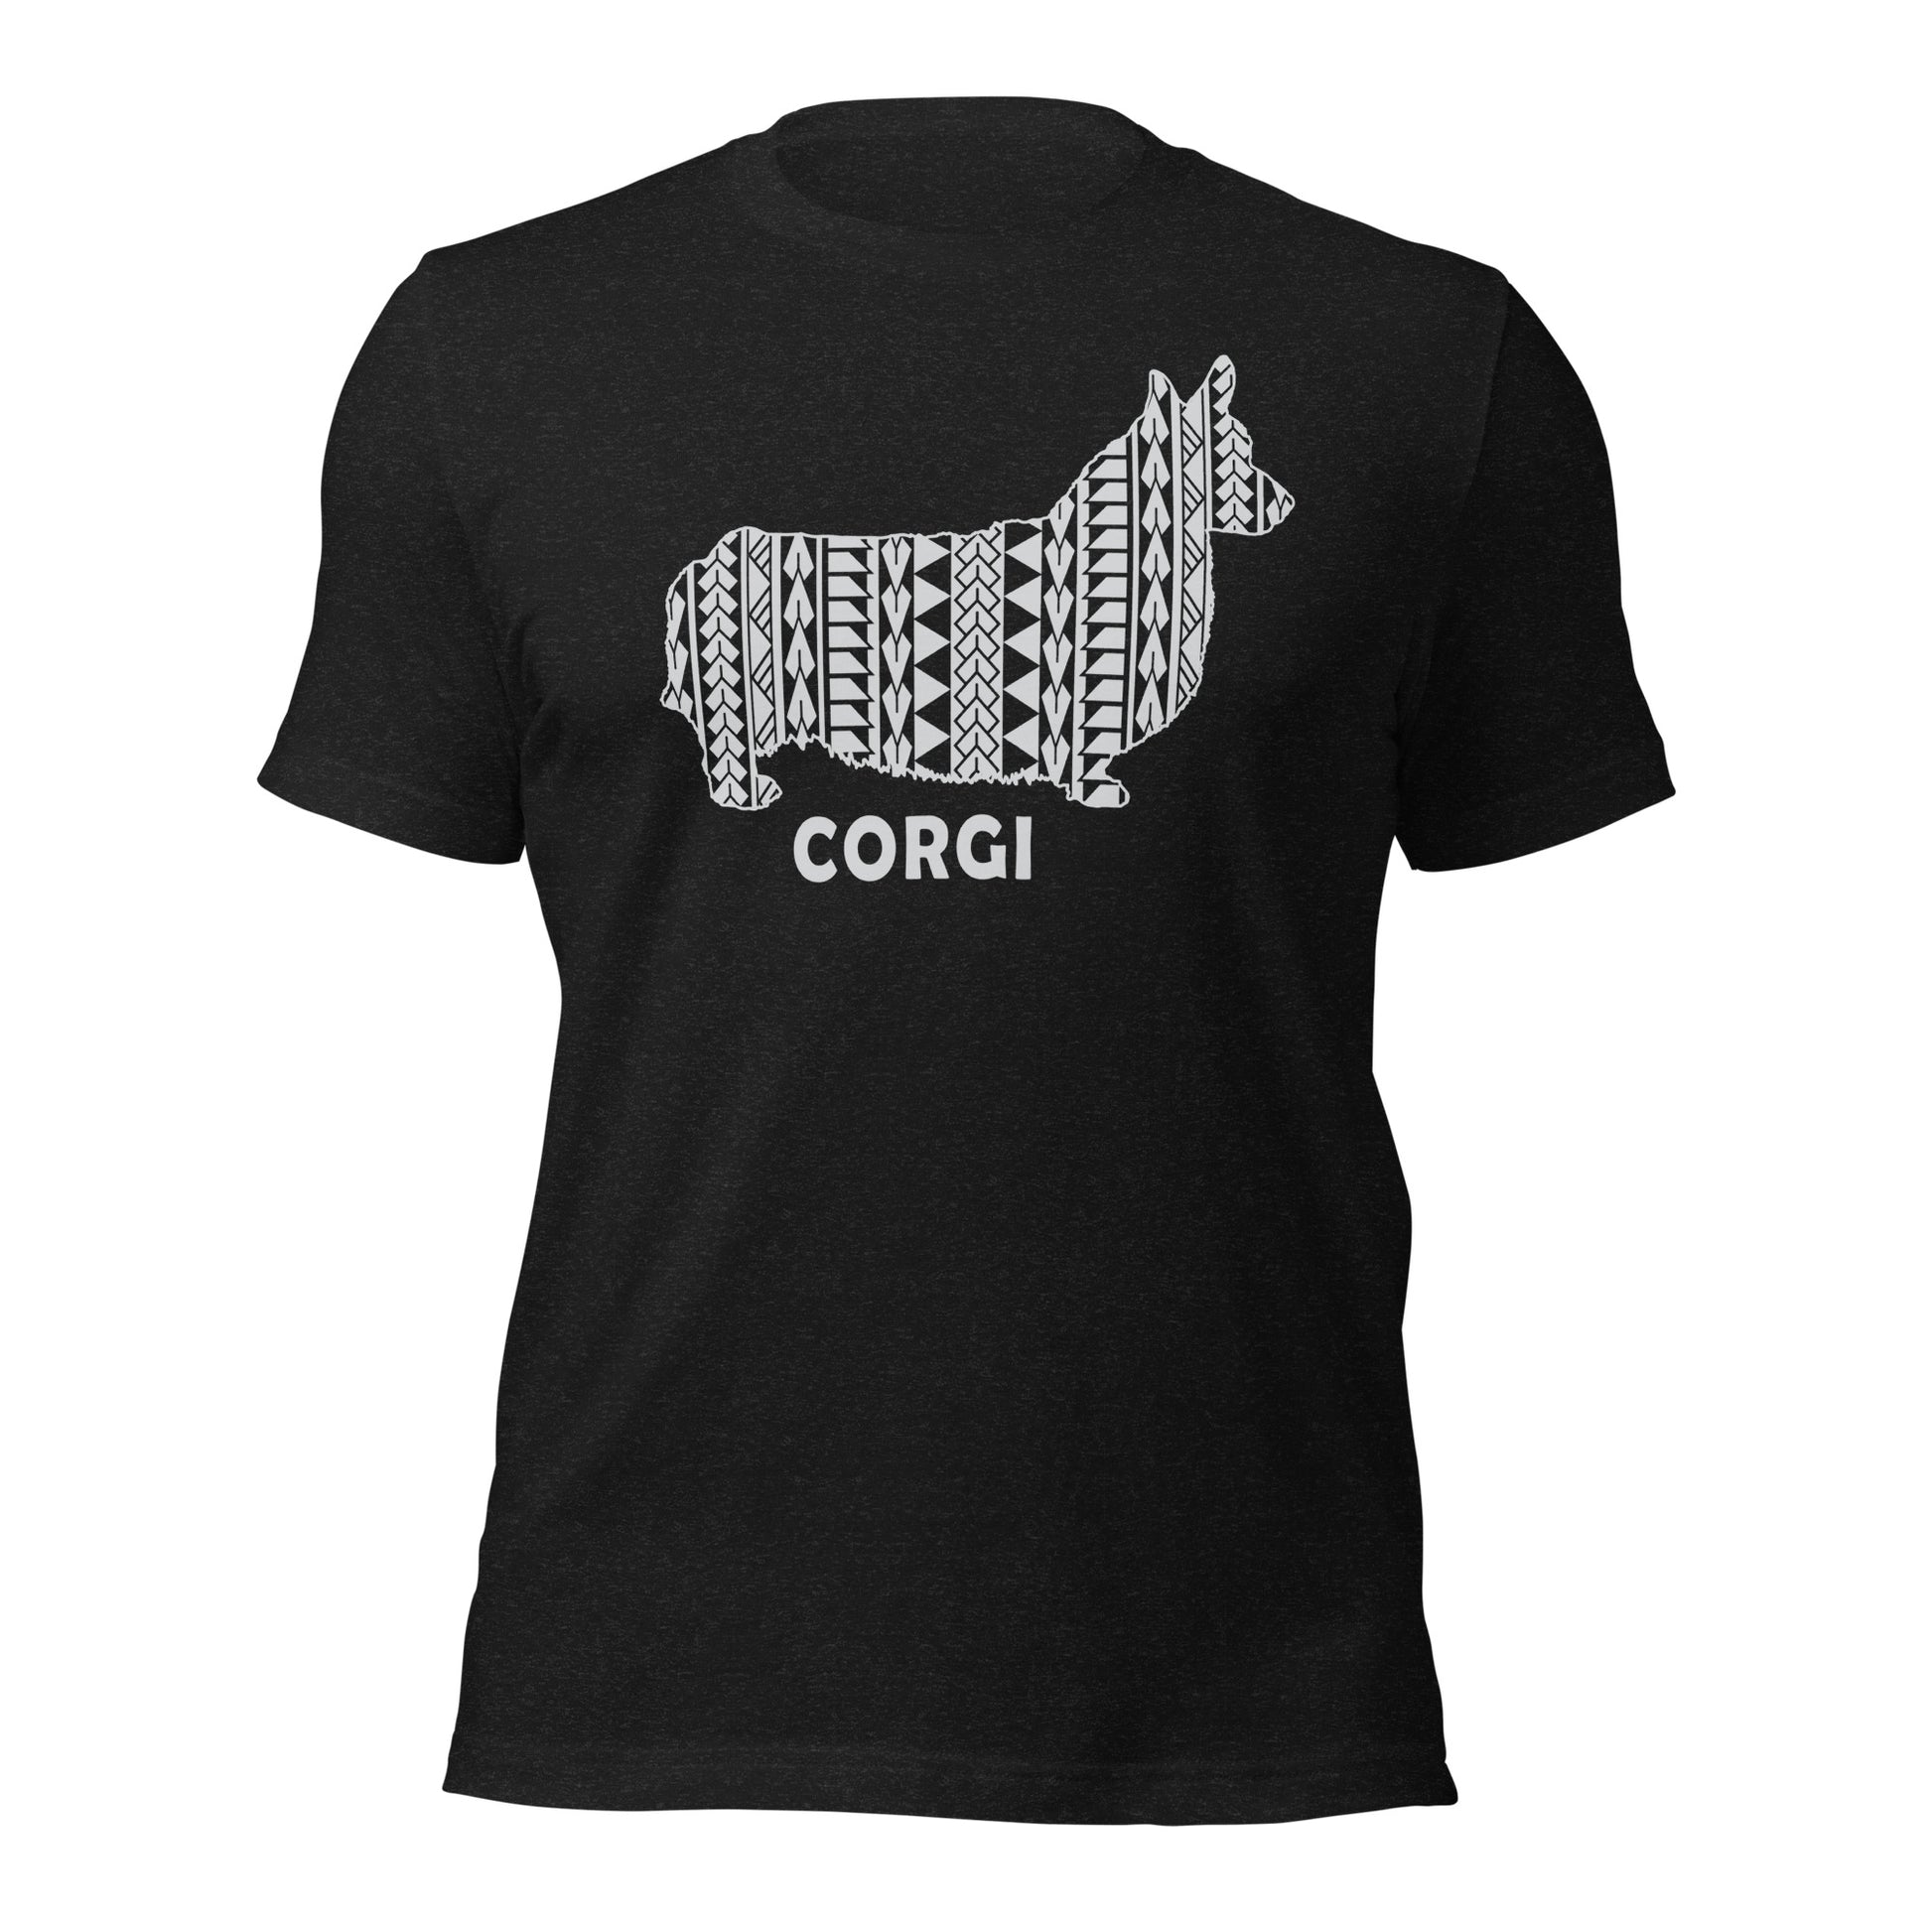 Corgi Polynesian t-shirt heather by Dog Artistry.